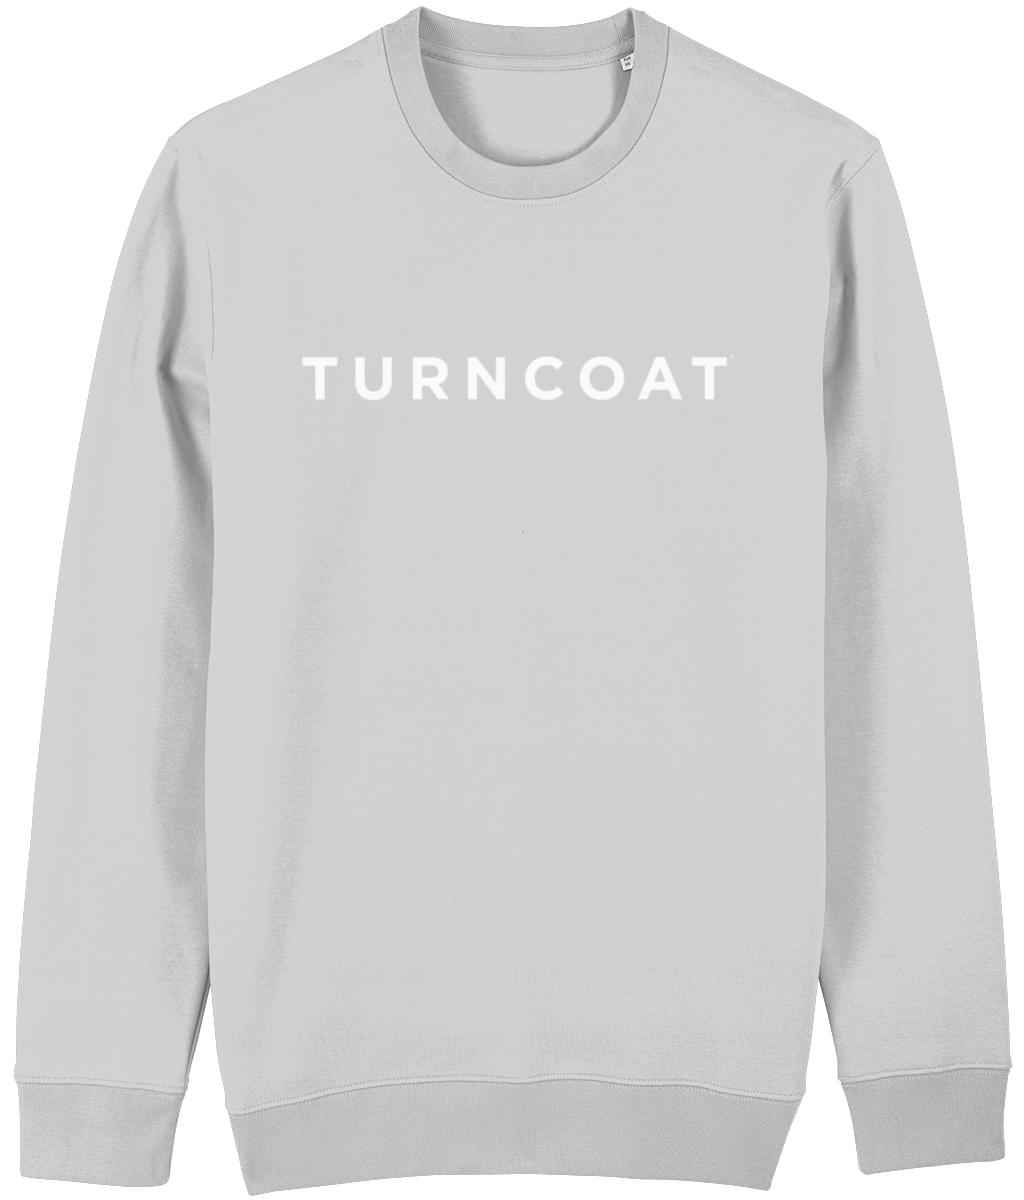 Turncoat Sweatshirt